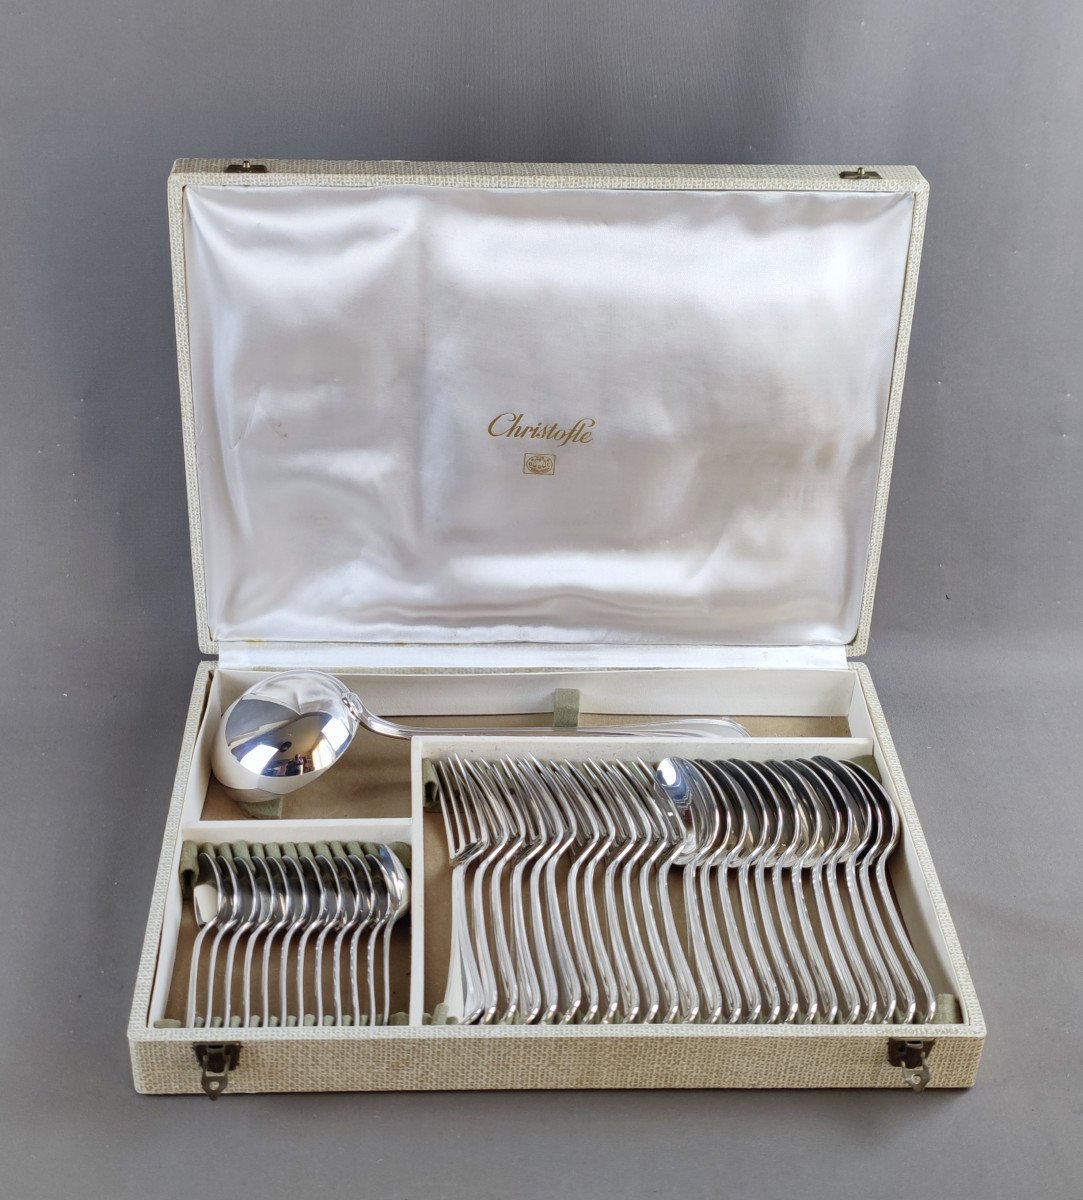 Christofle, Spatours Model, 37 Piece Cutlery Set 